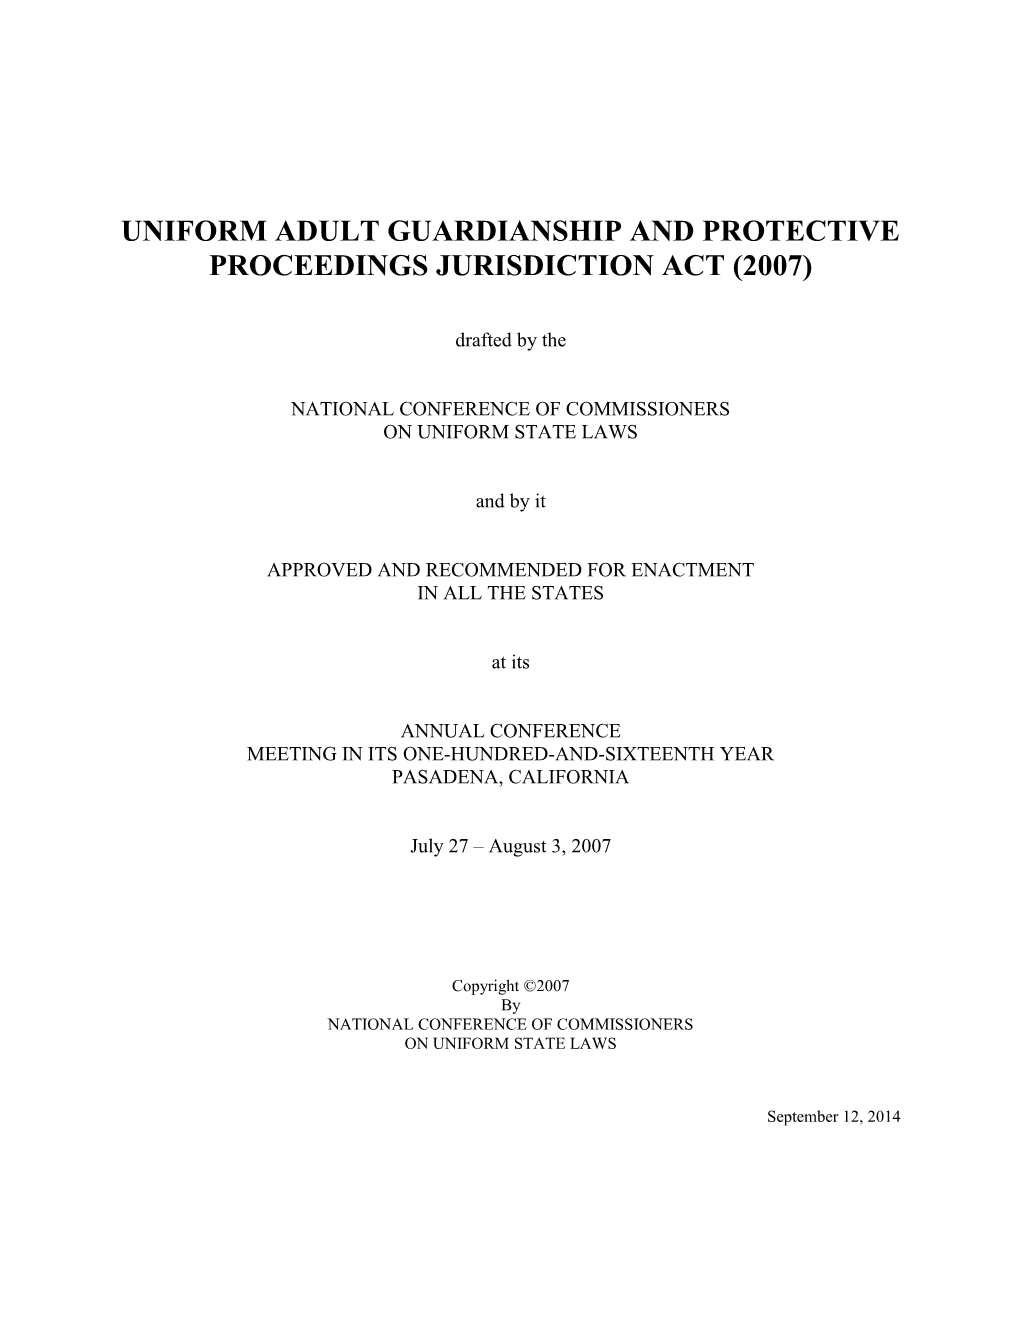 Uniform Adult Guardianship and Protective Proceedings Jurisdiction Act (2007)